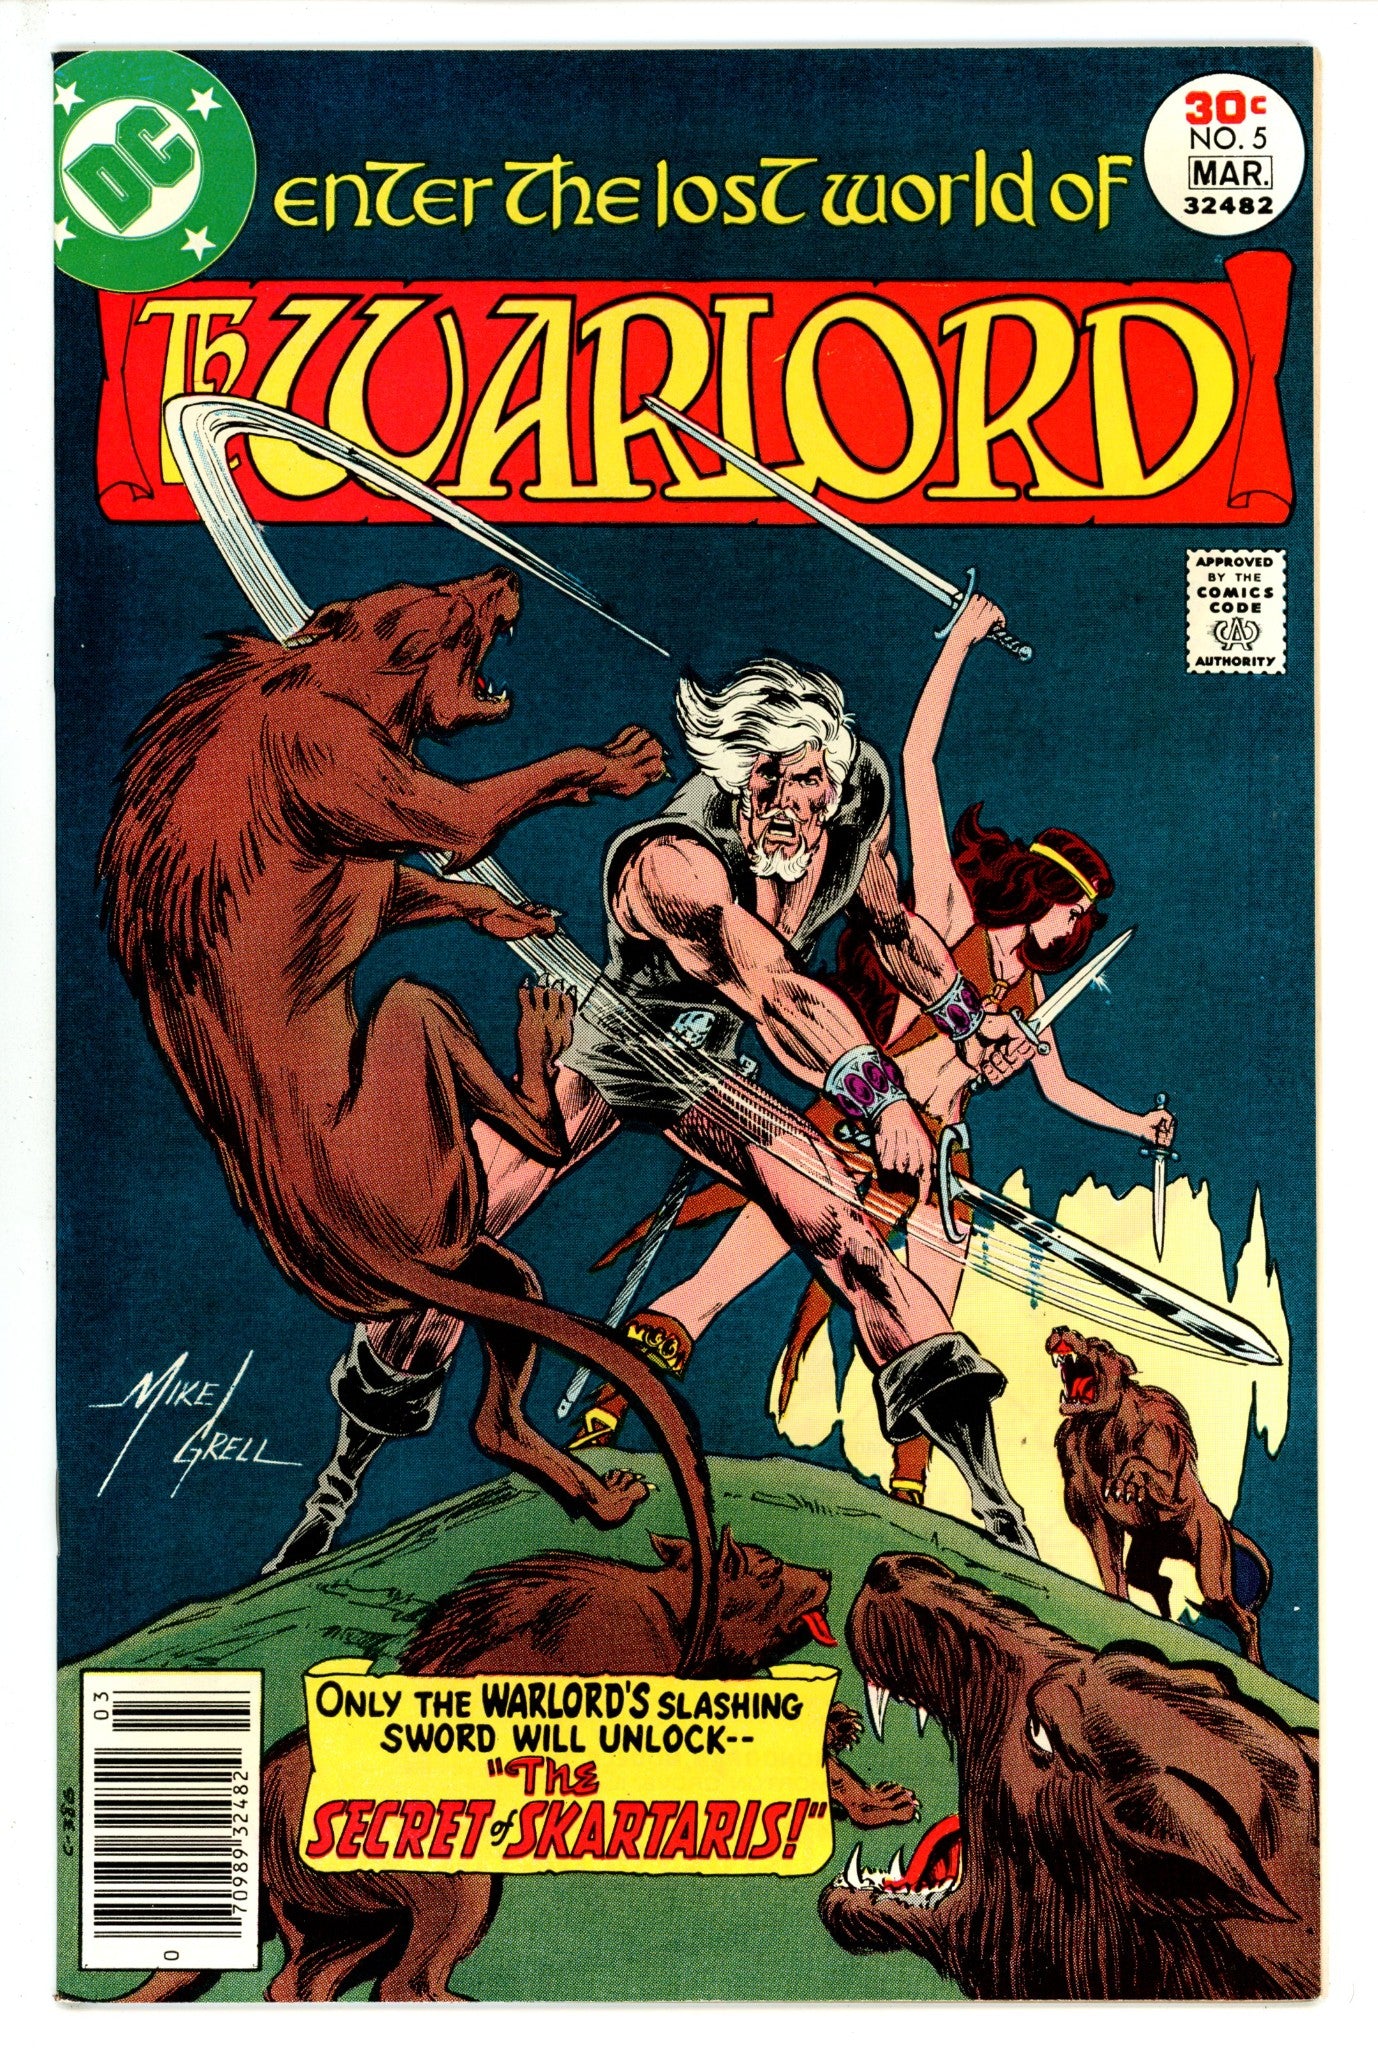 Warlord Vol 1 5 NM- (1977)